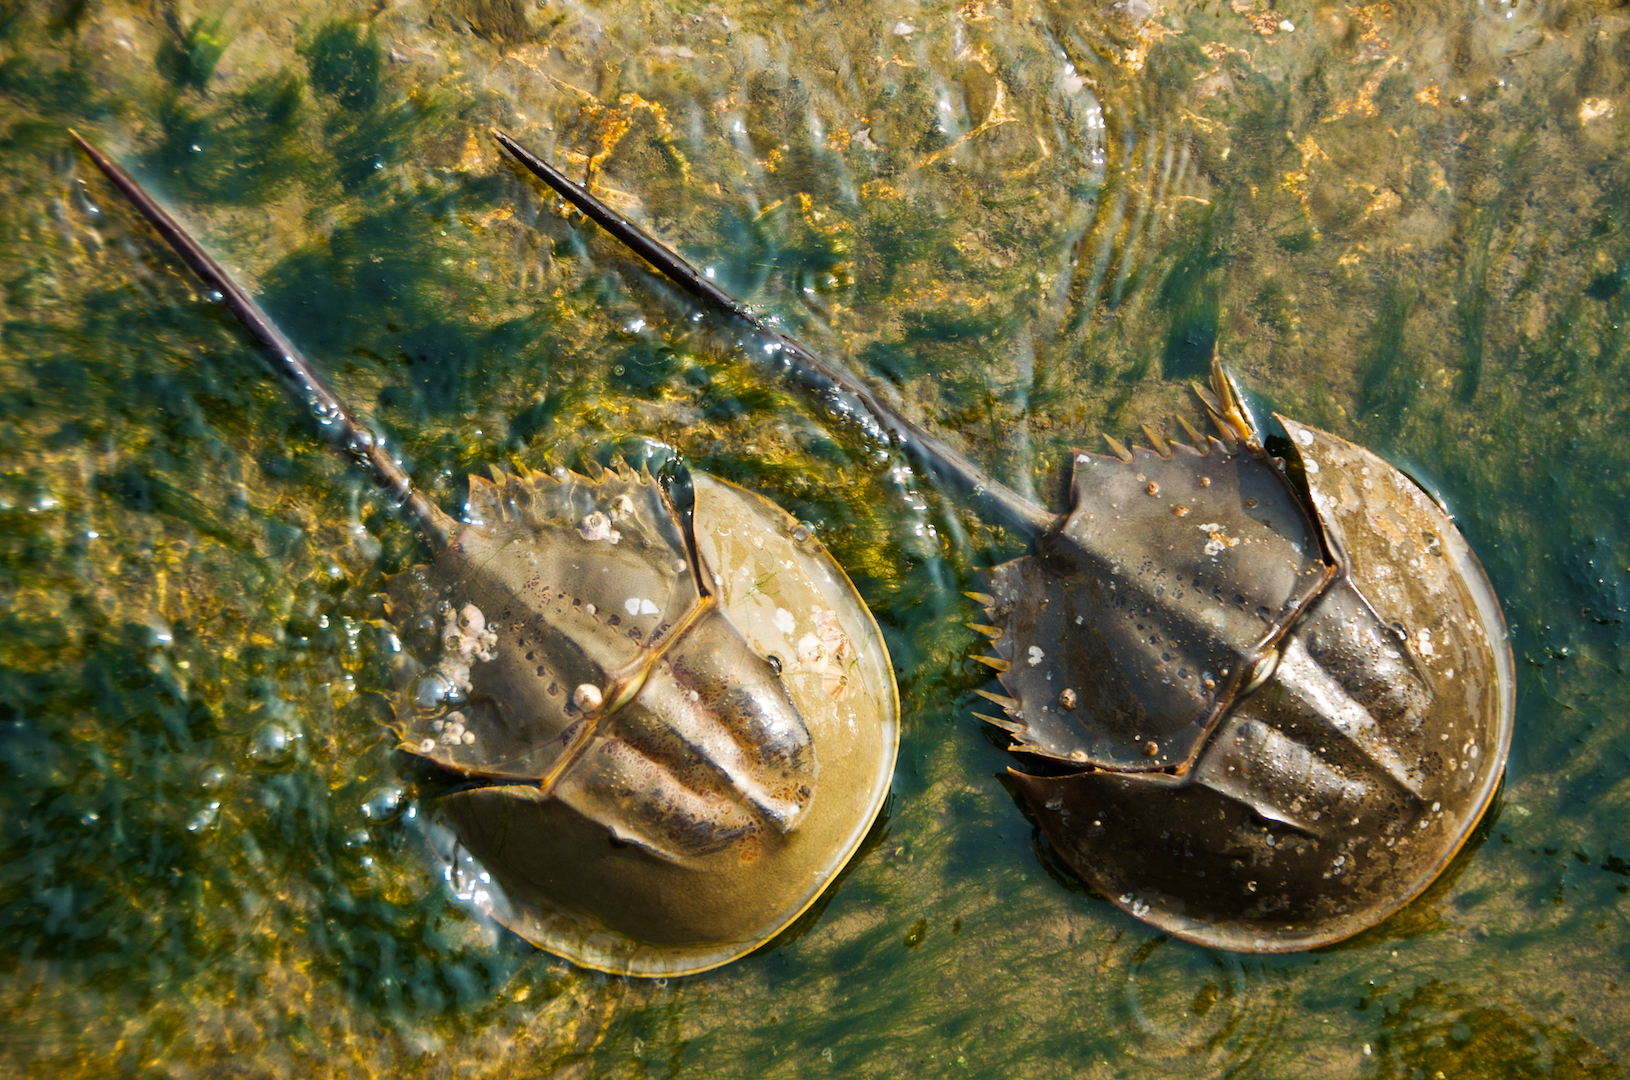 Two horseshoe crabs